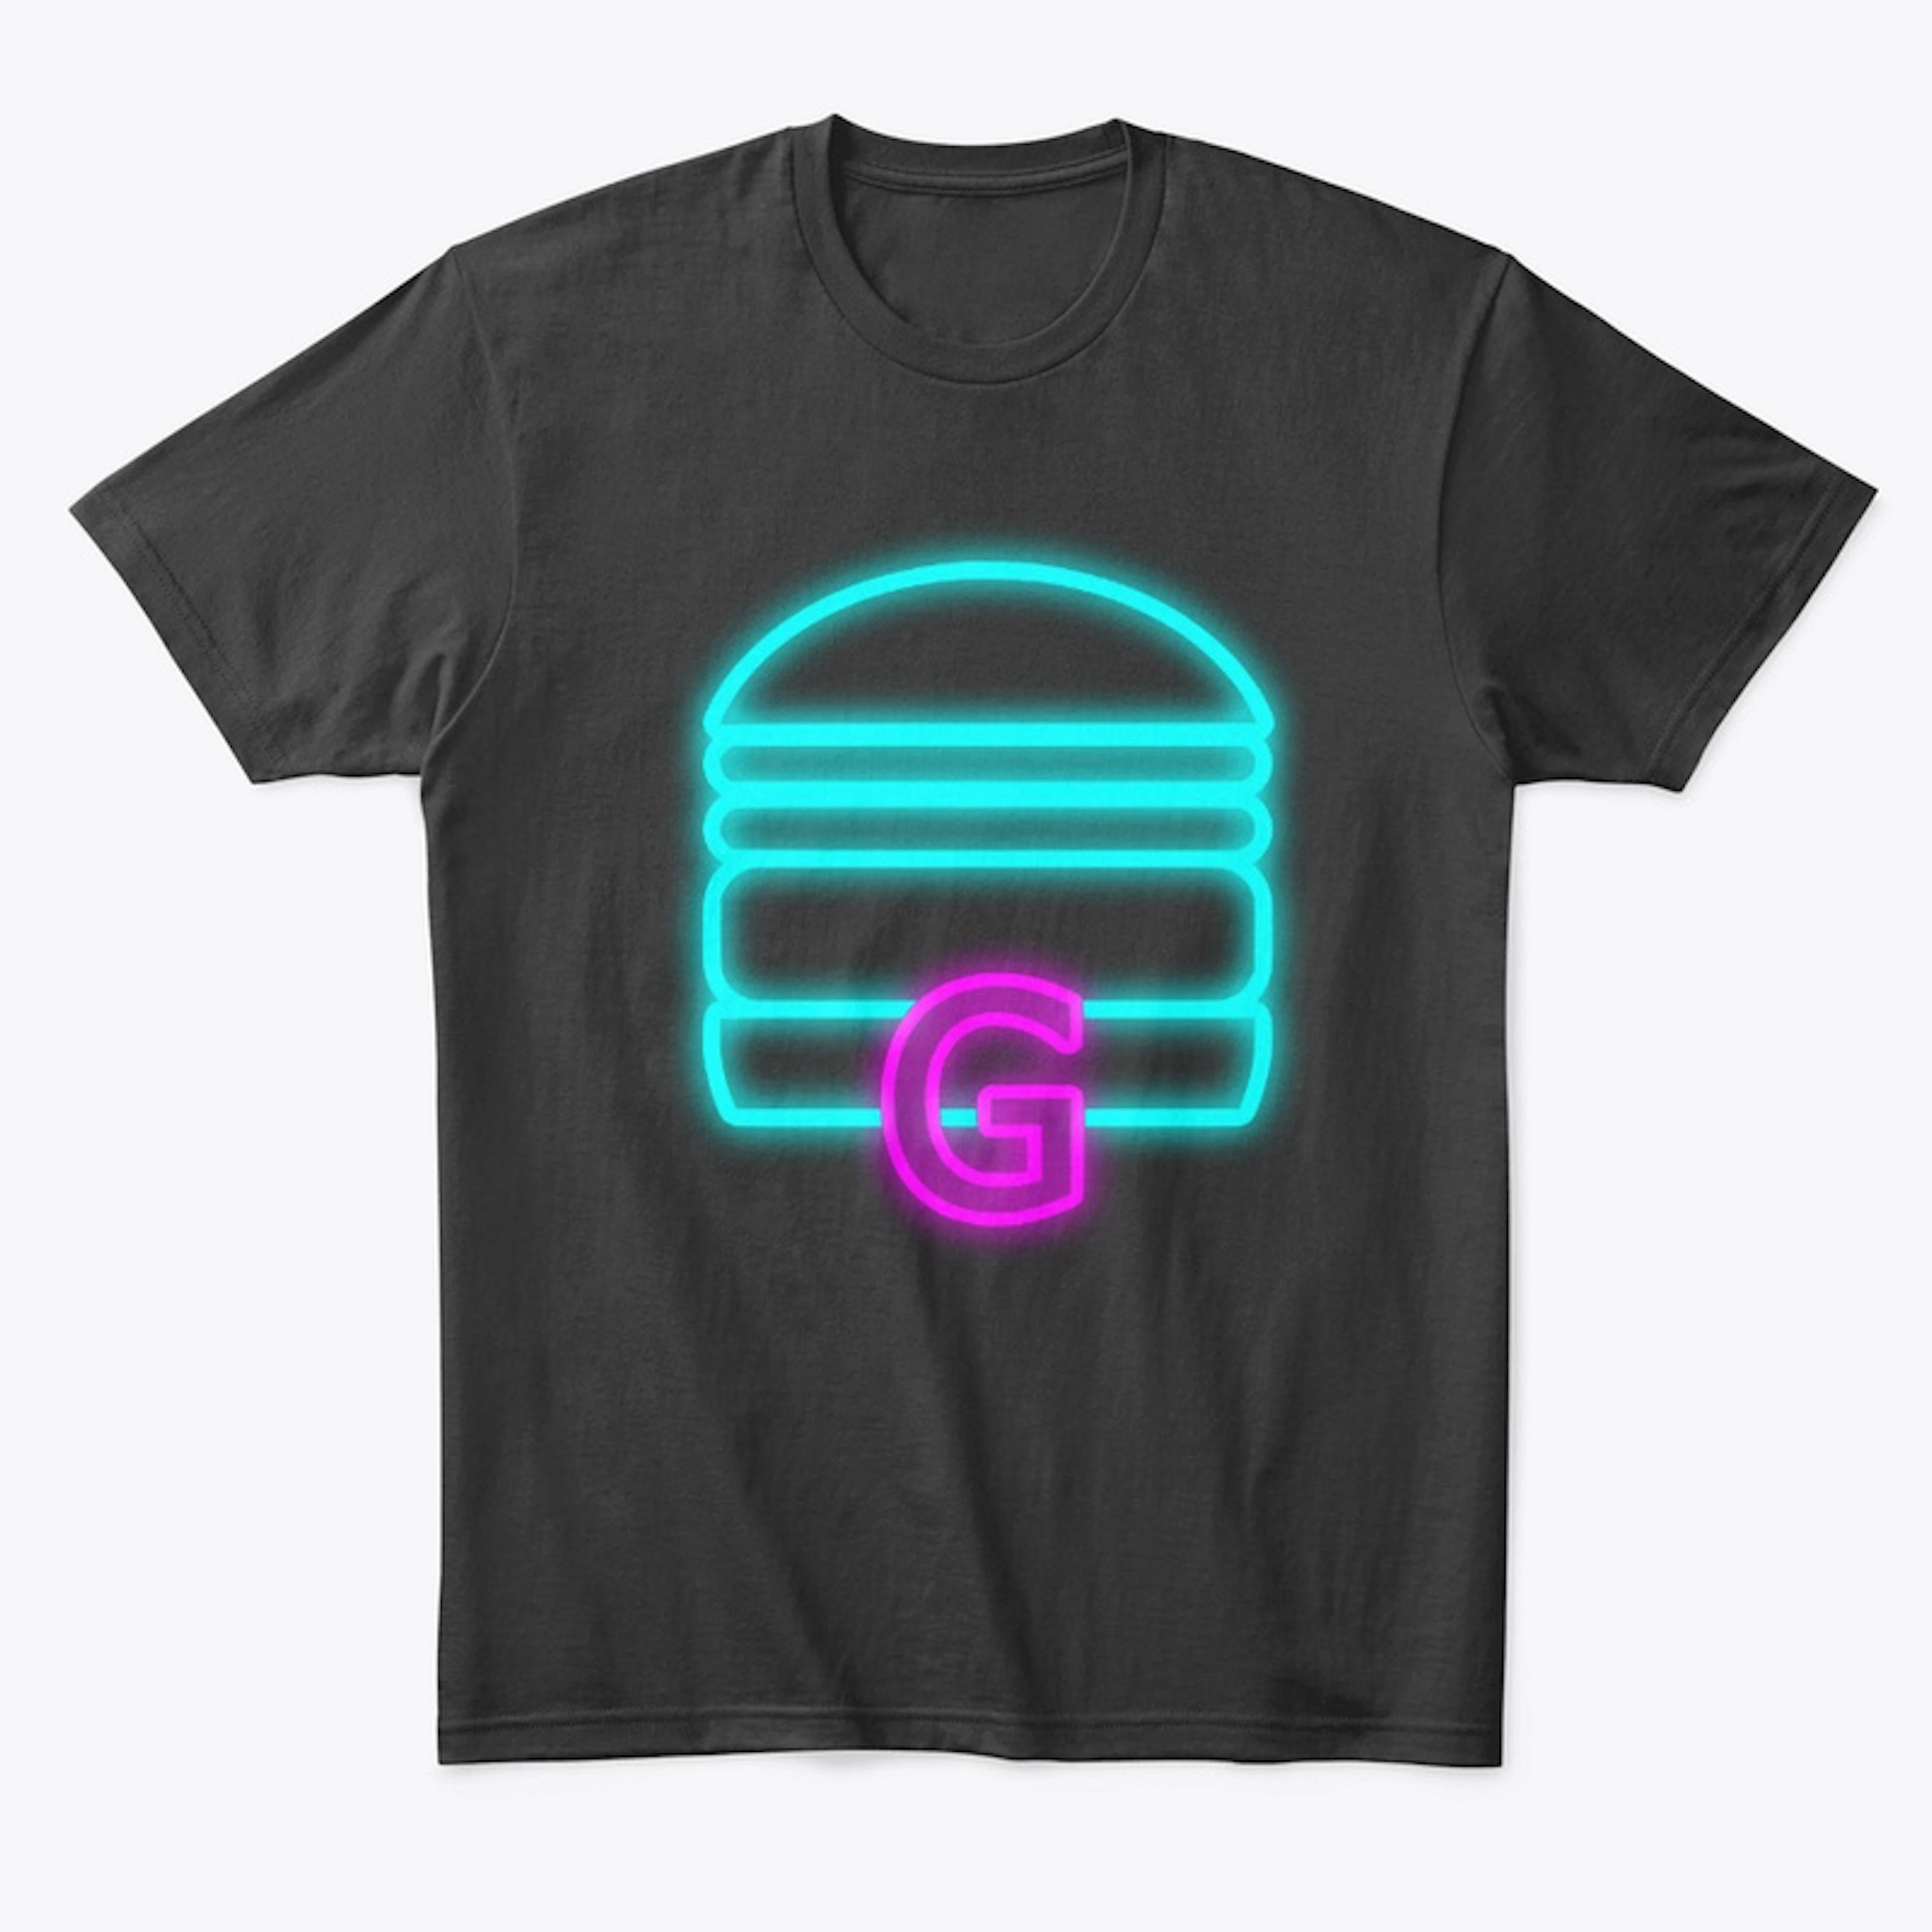 Neon Burger